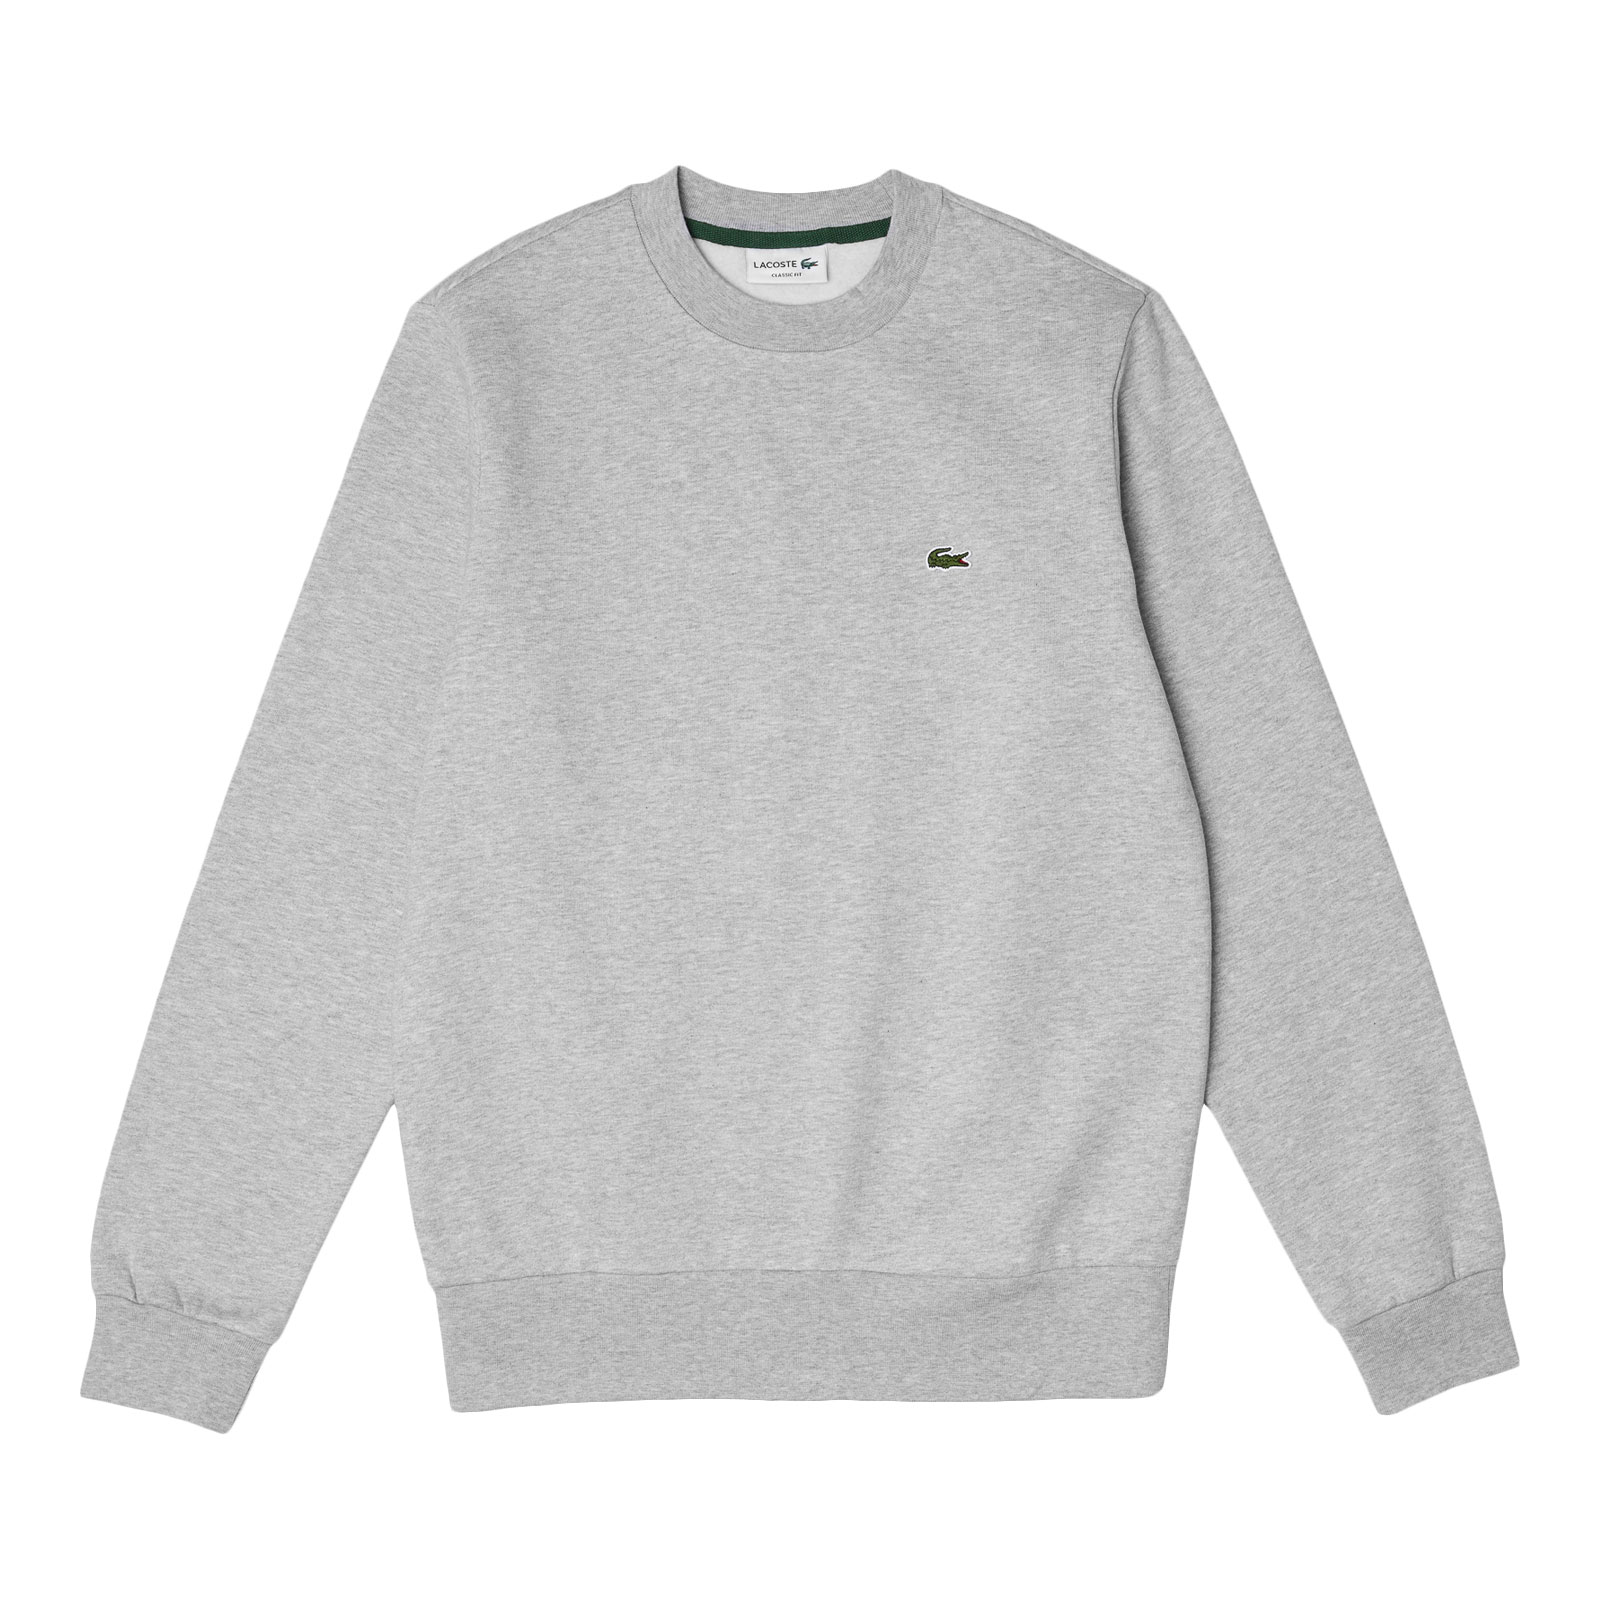 Bonvenon Sweatshirt LACOSTE | Webshop